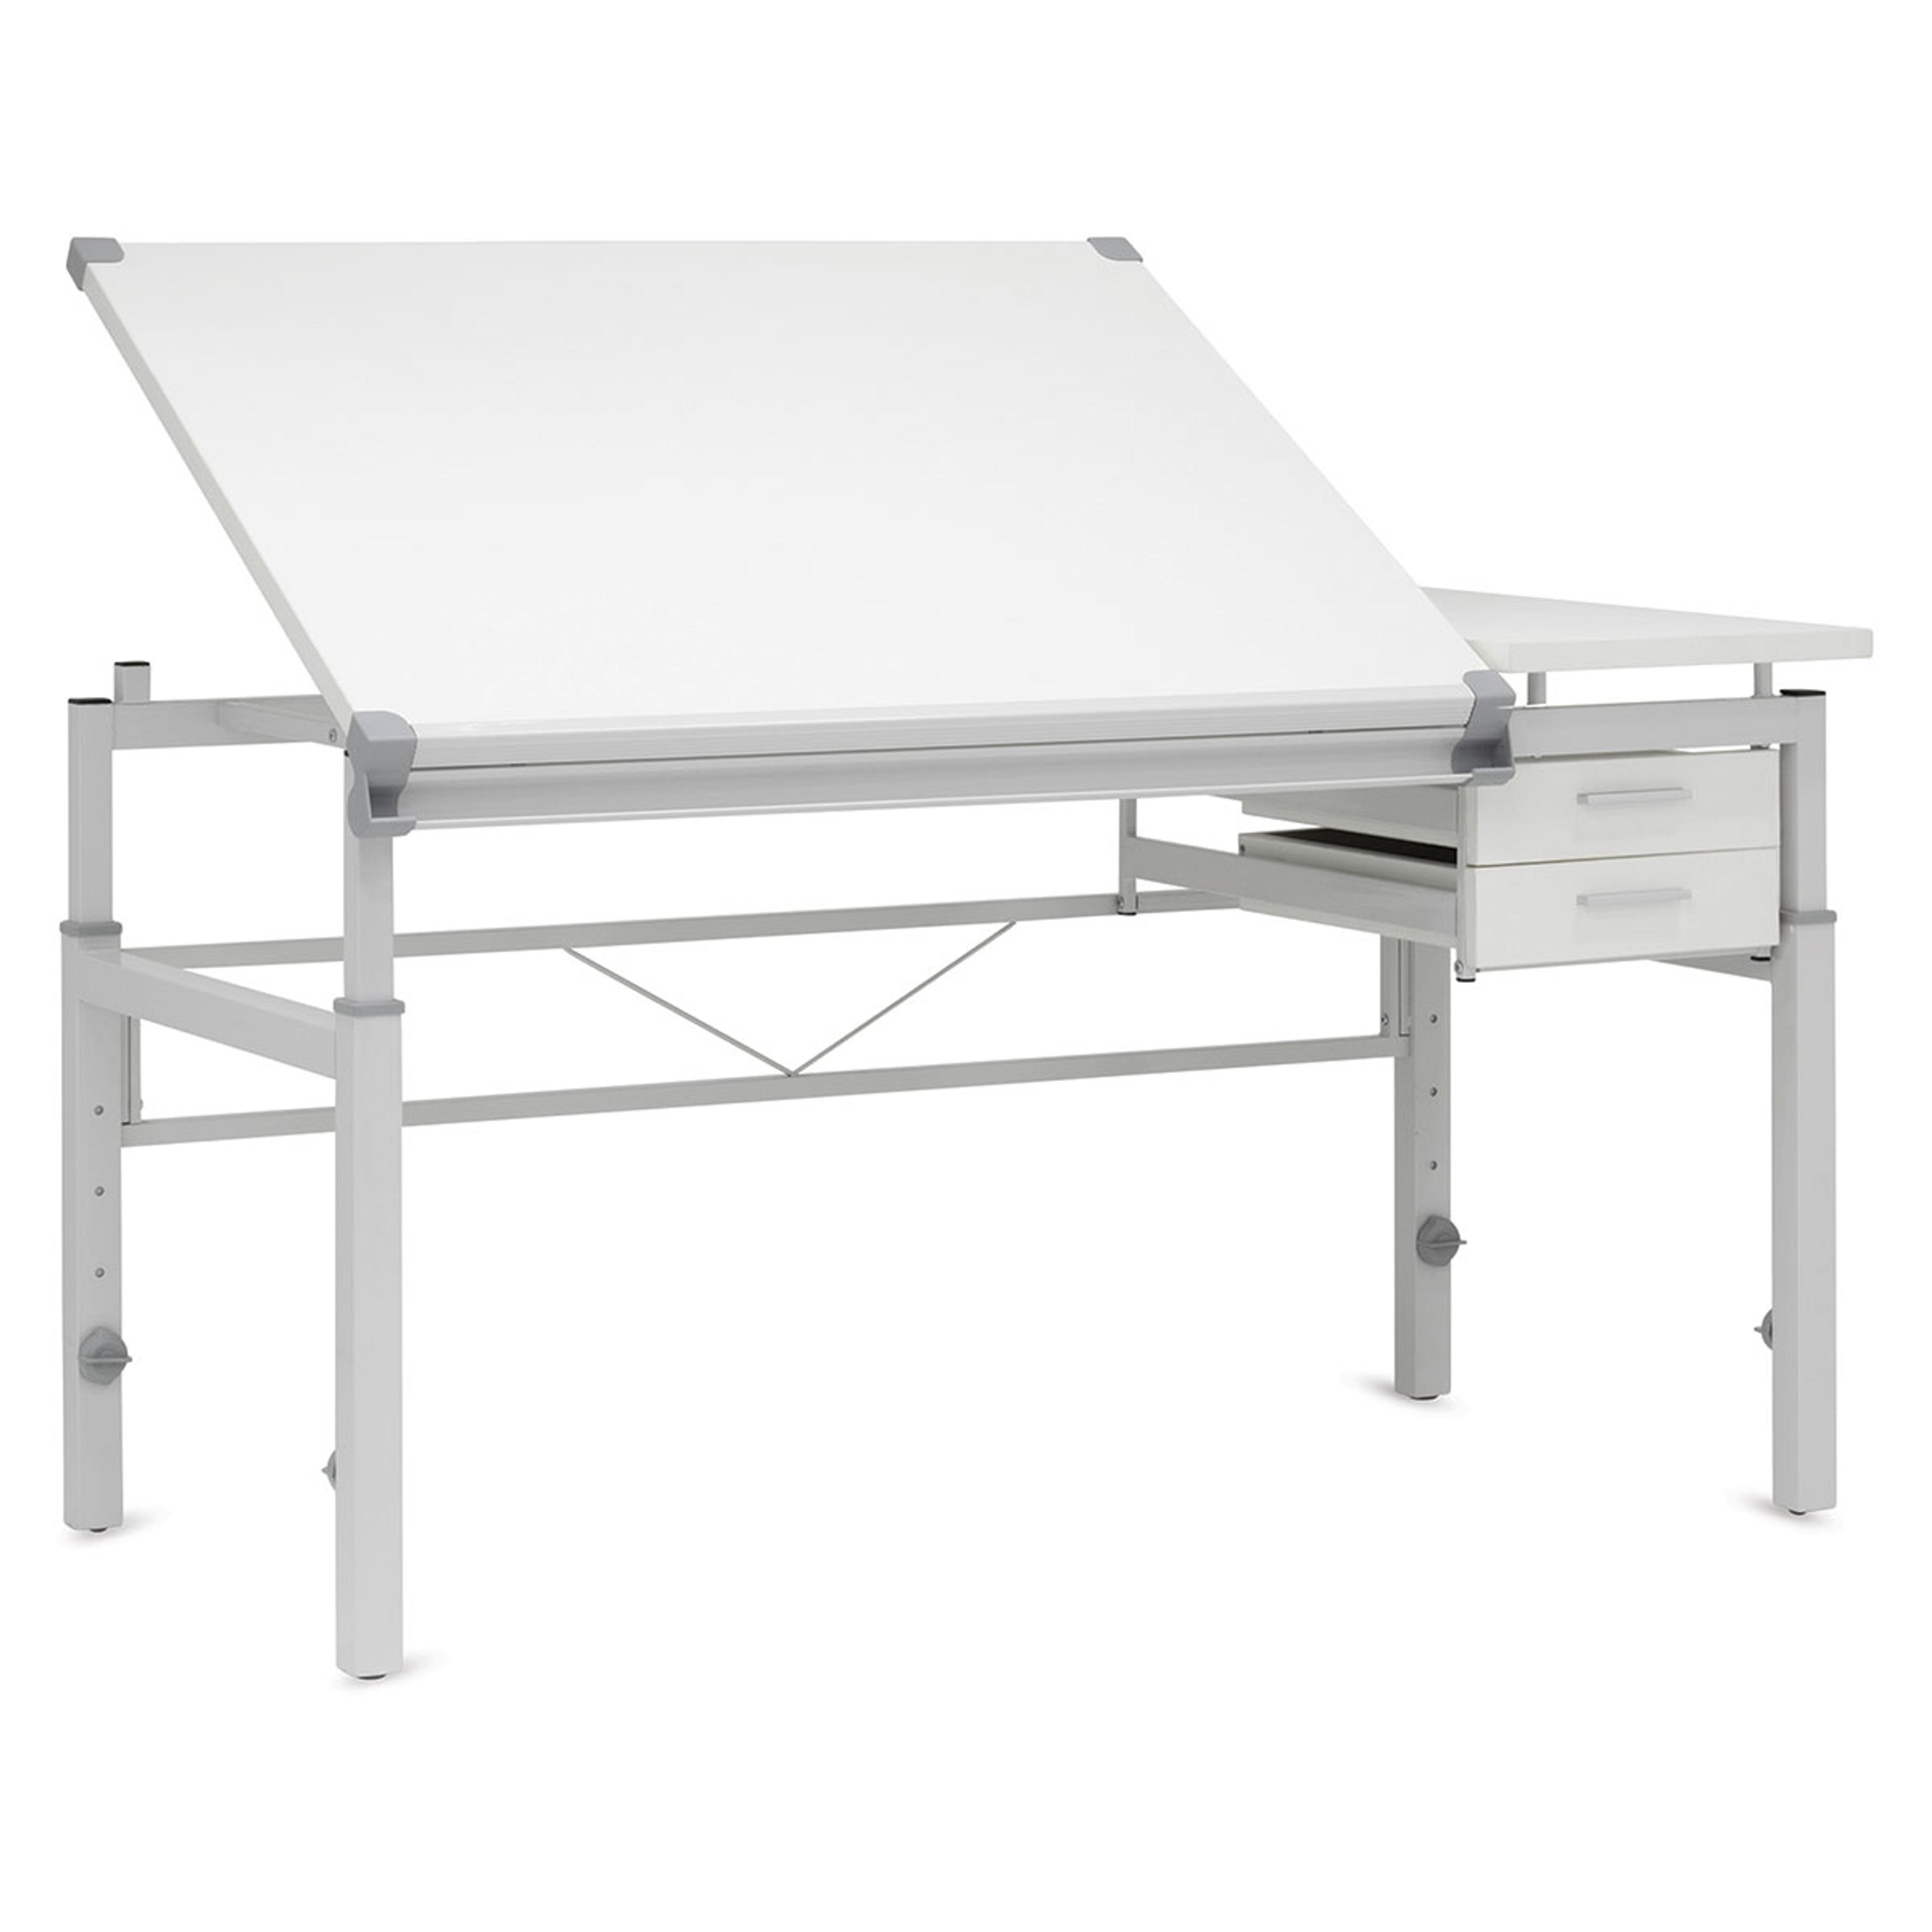 Studio Designs Graphix II Pro Line Table With Drawers | BLICK Art Materials